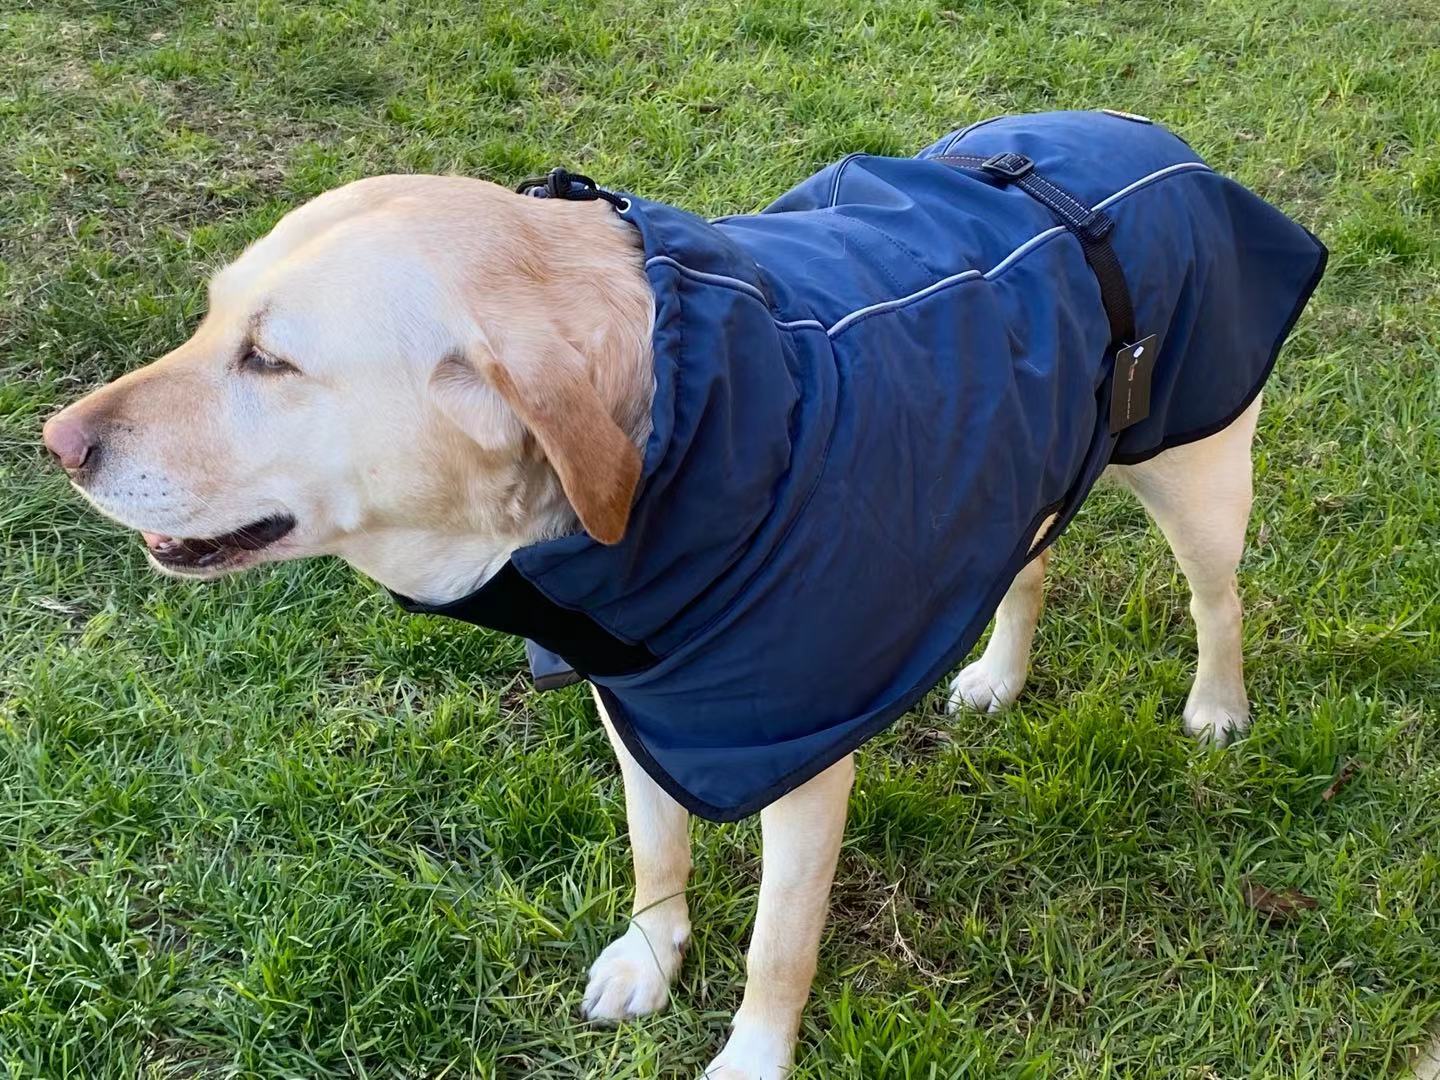 Pet Dog Raincoat Poncho Jacket Windbreaker Waterproof Clothes with Harness Hole-XL-Blue